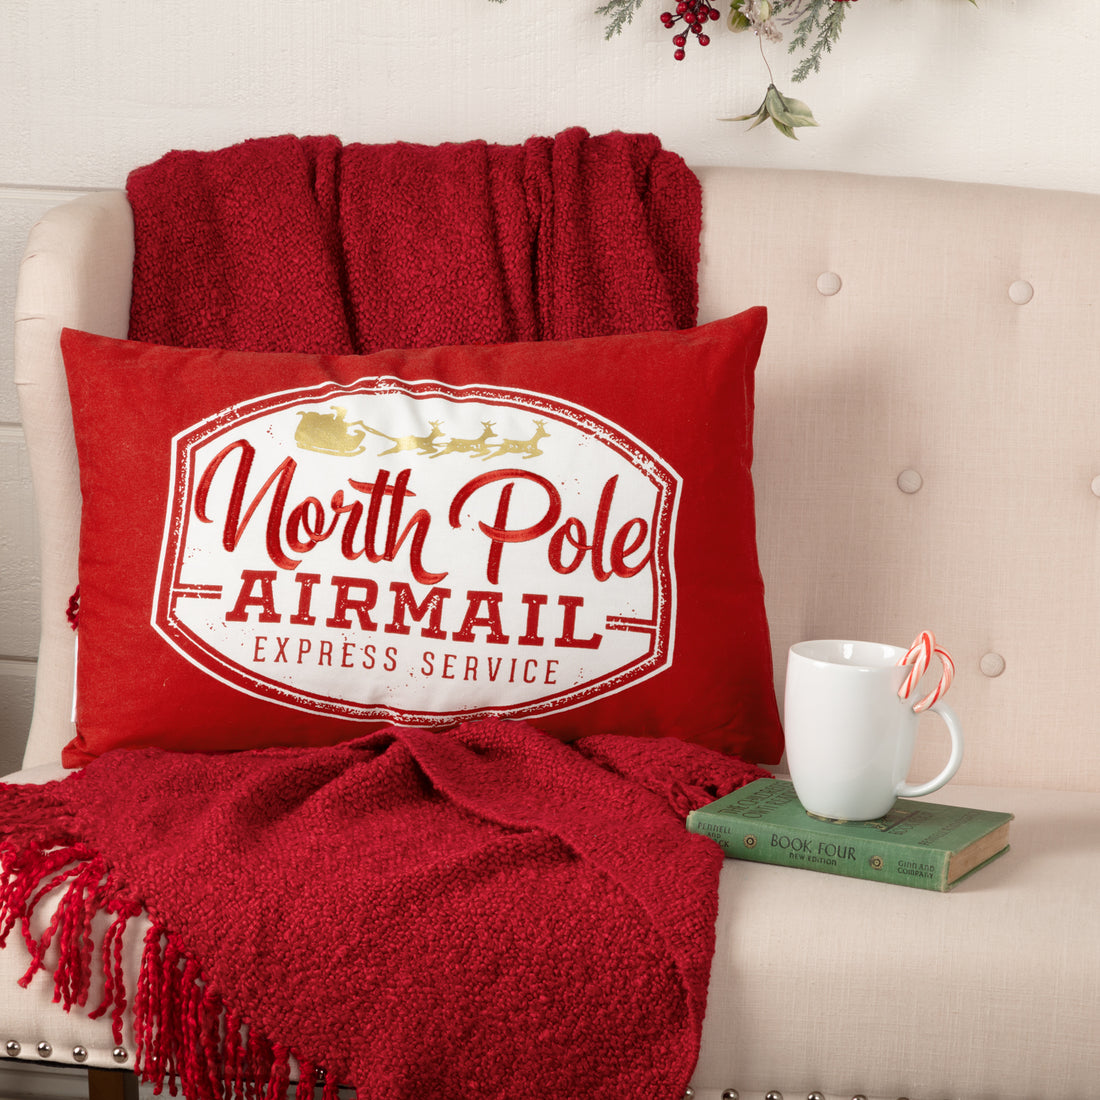 Primitive Christmas North Pole Airmail Pillow 14x22